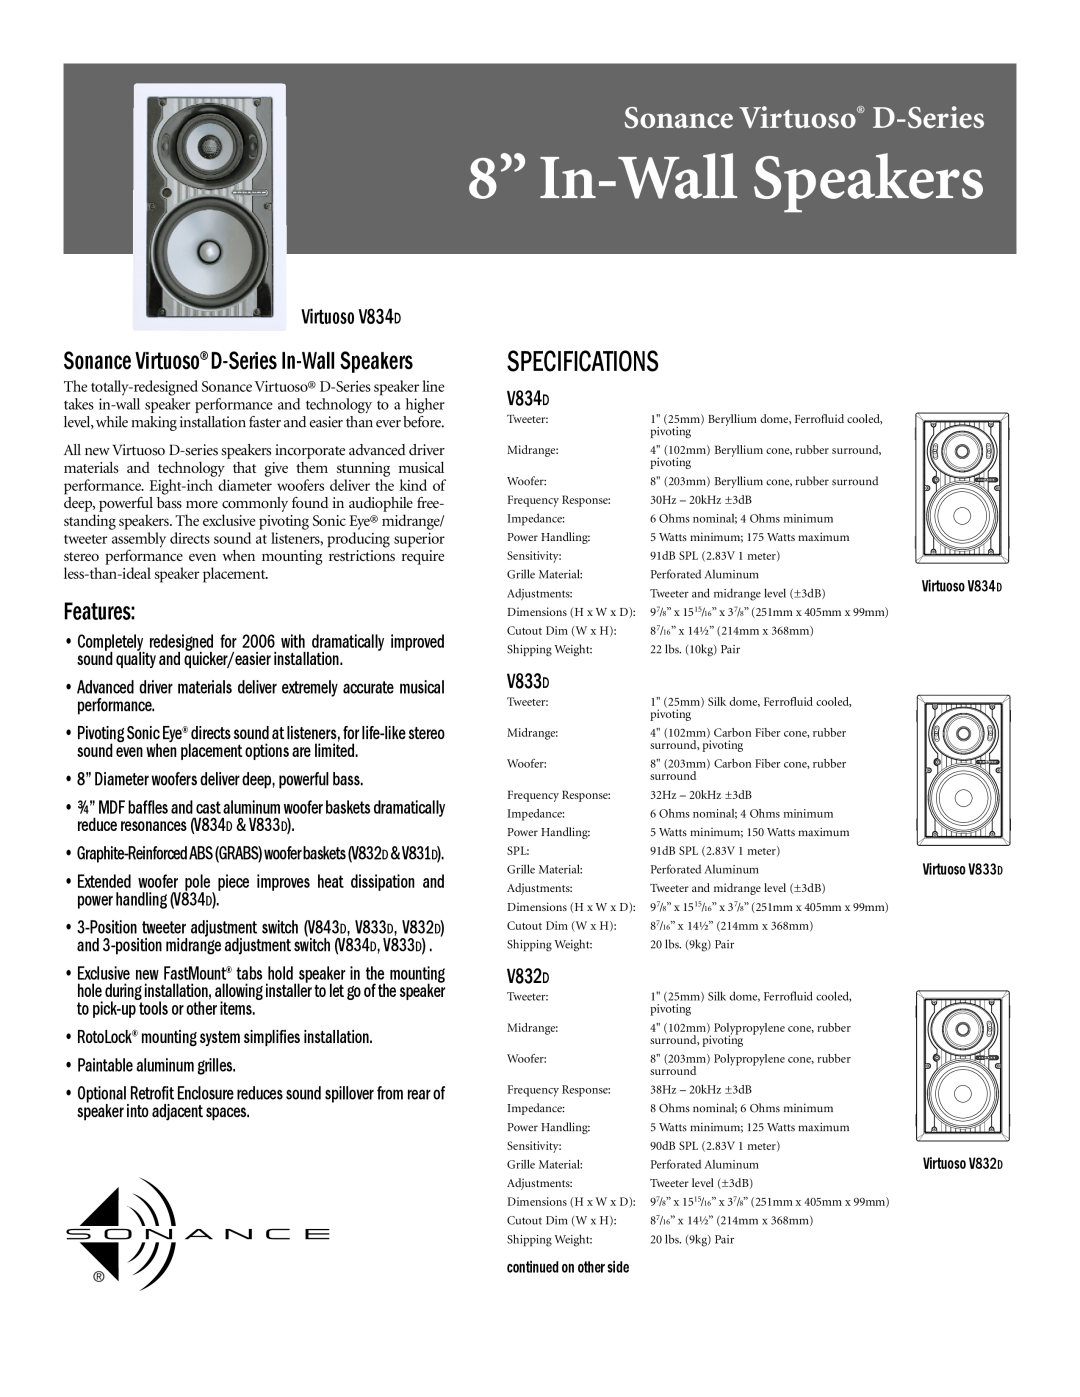 Sonance specifications 8” In-WallSpeakers, Sonance Virtuoso D-Series, Specifications, Virtuoso V834D, V833D, V832D 